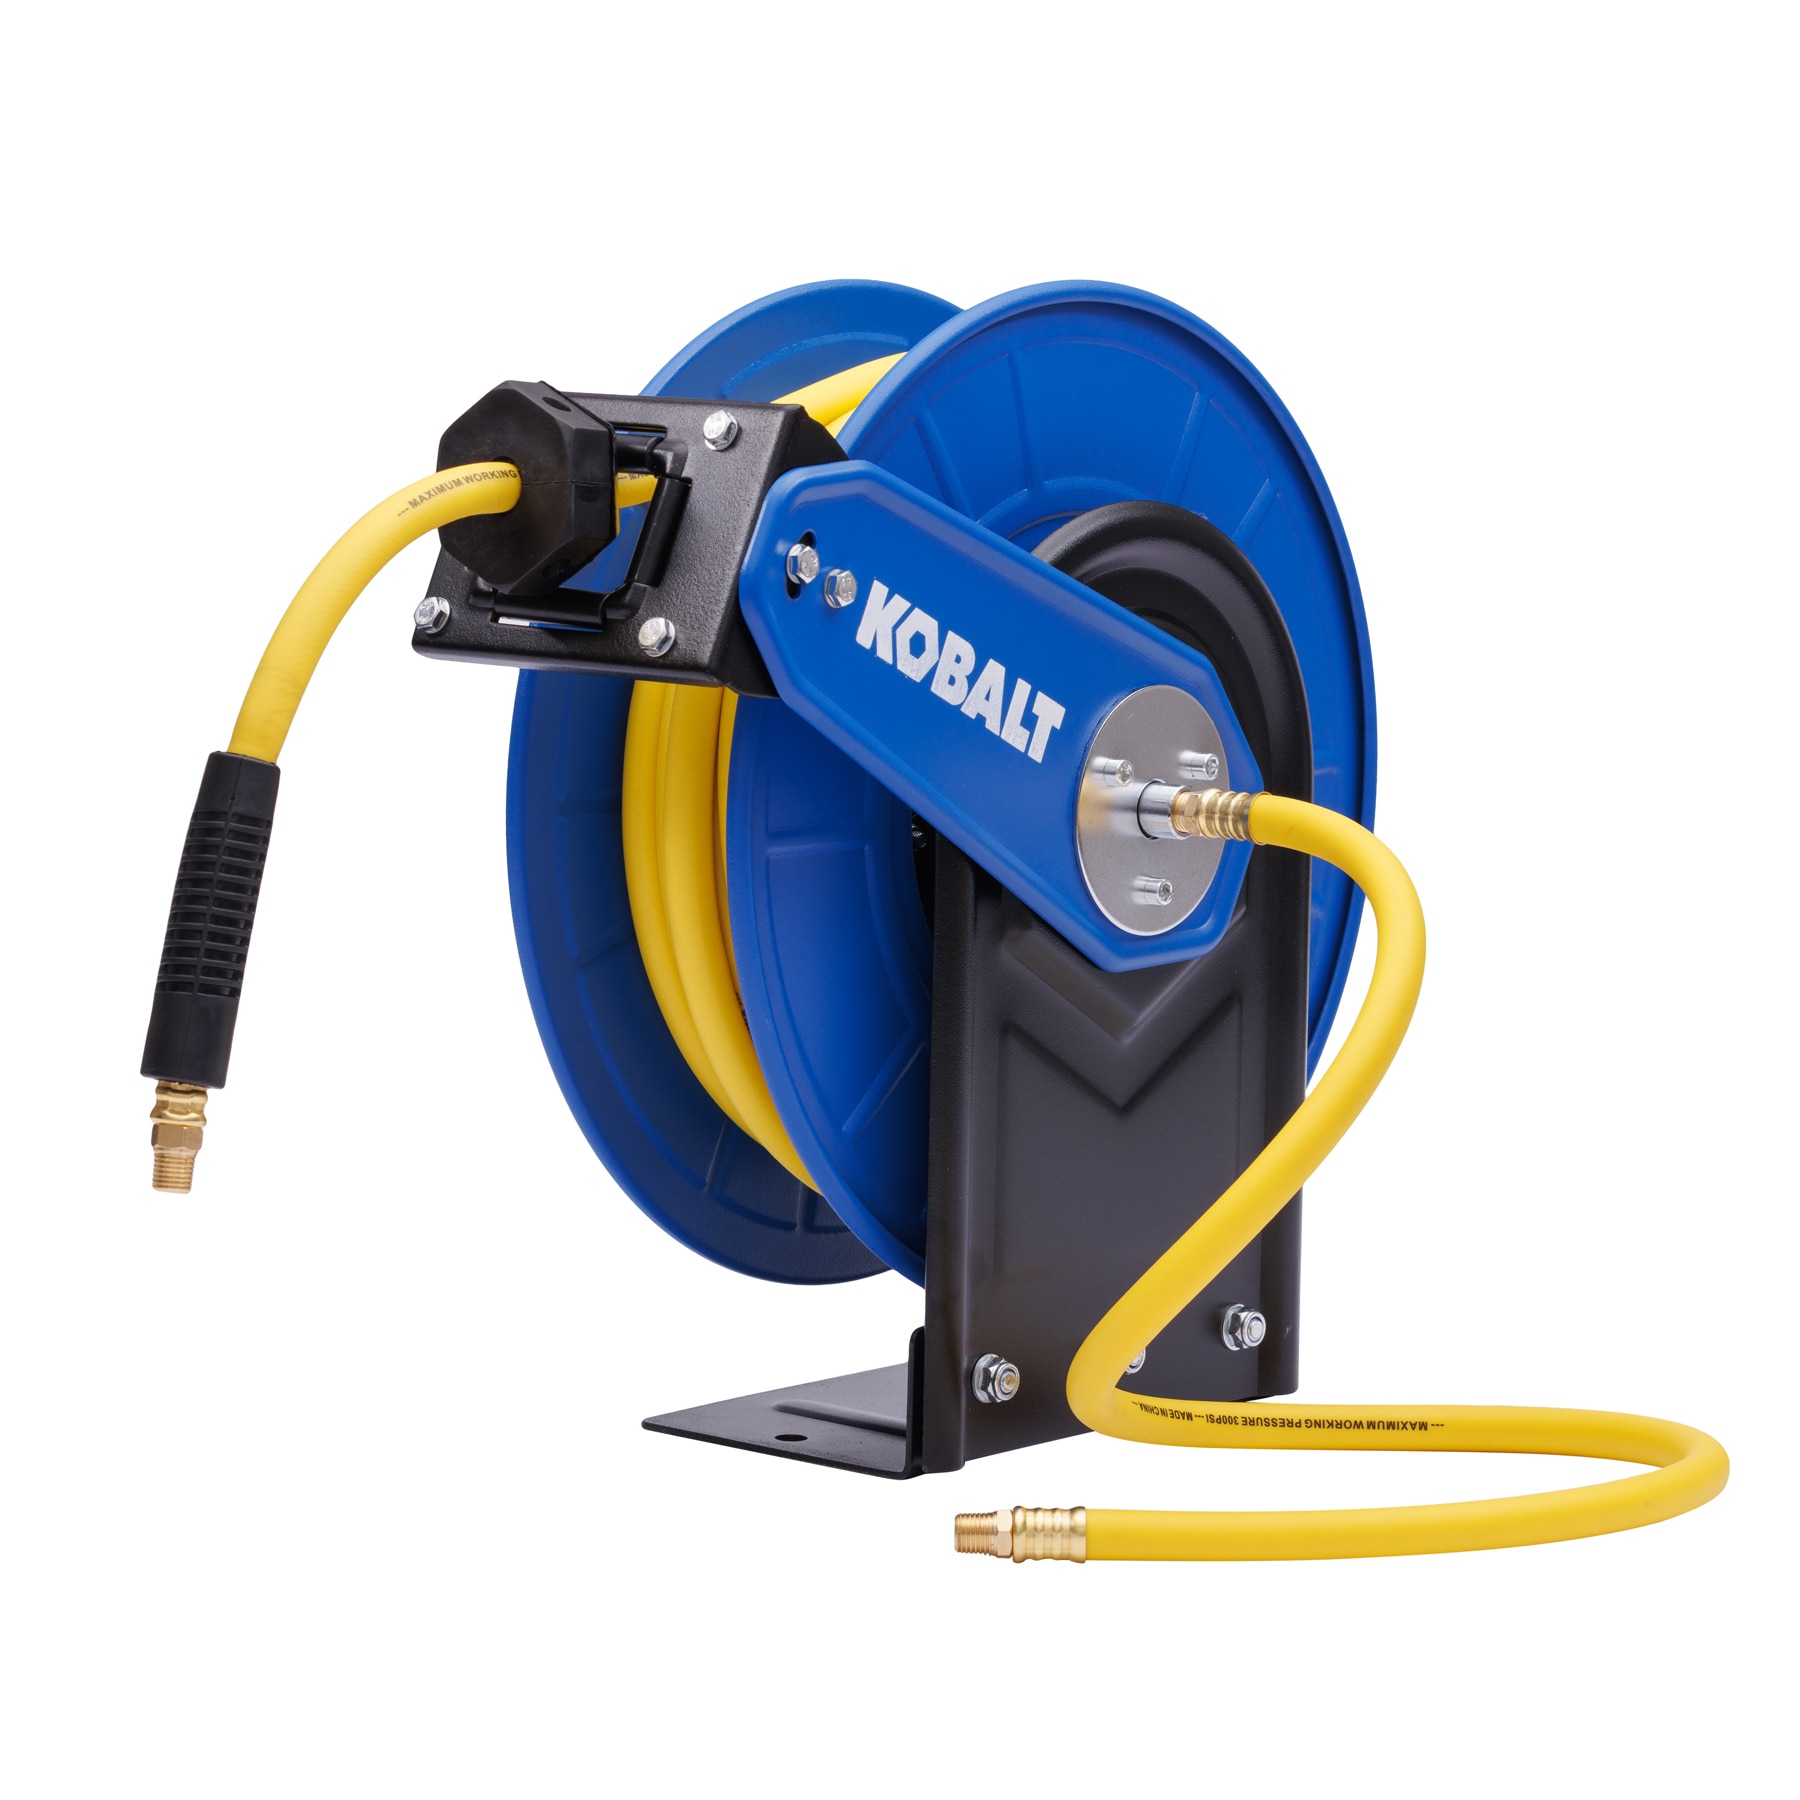 Kobalt Retractable Hose Reel with 3/8-in x 50-ft Hybrid Hose